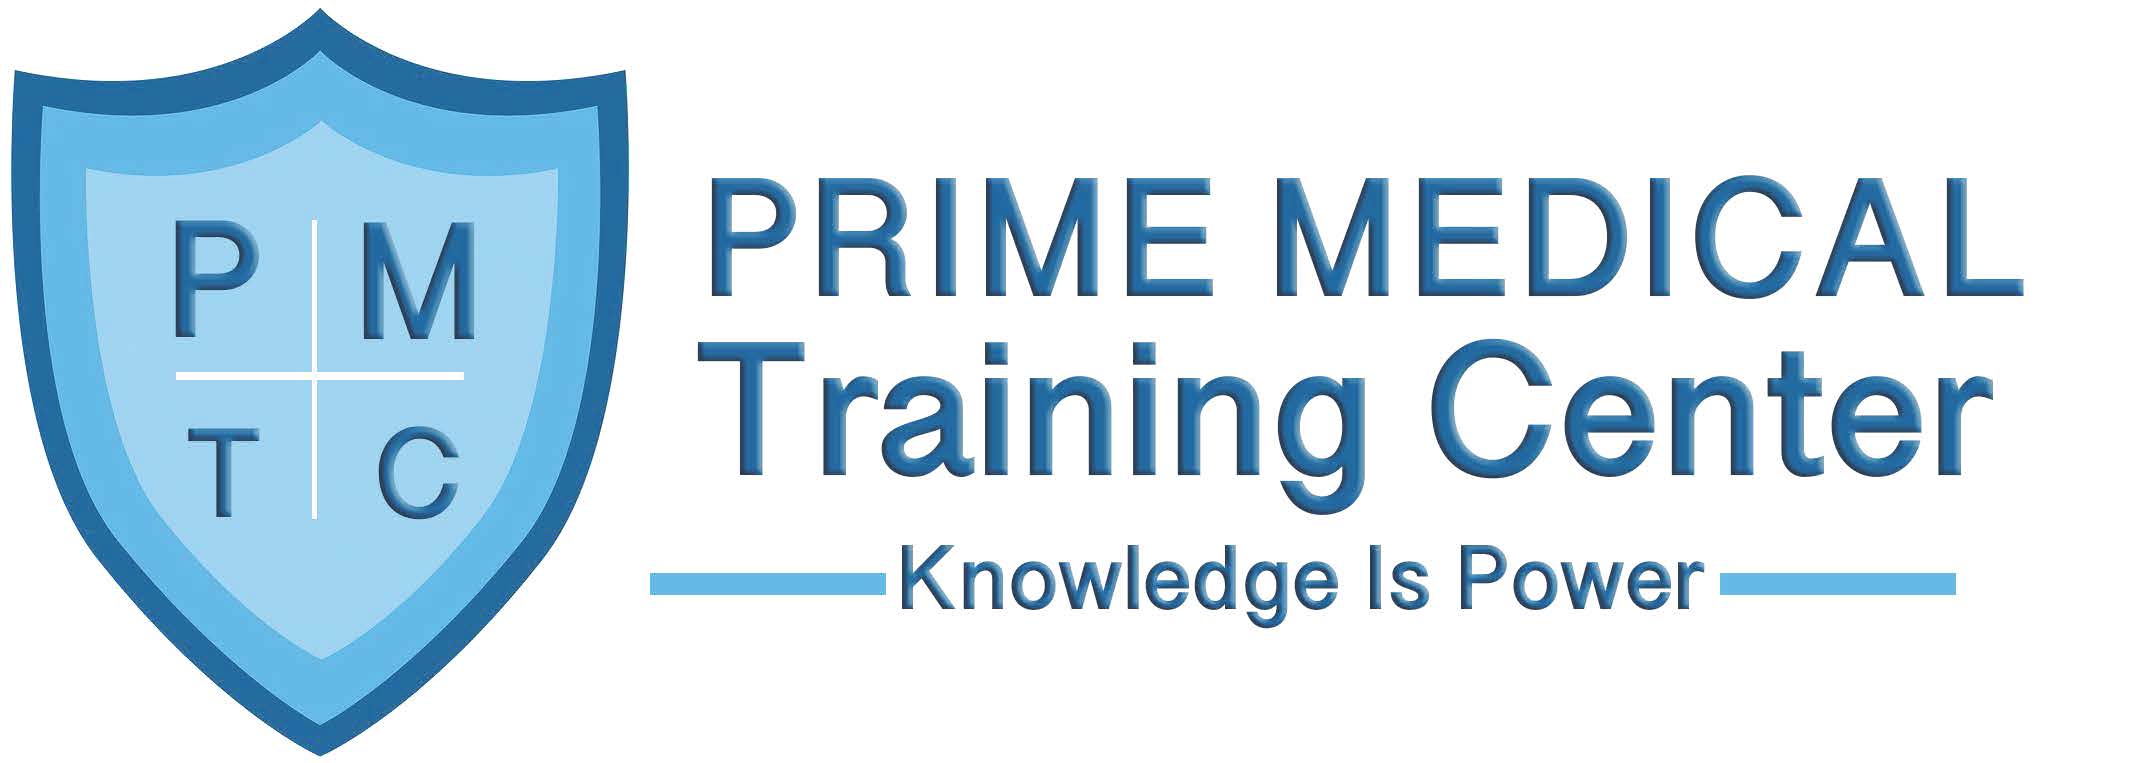 Prime Medical Training Center Logo